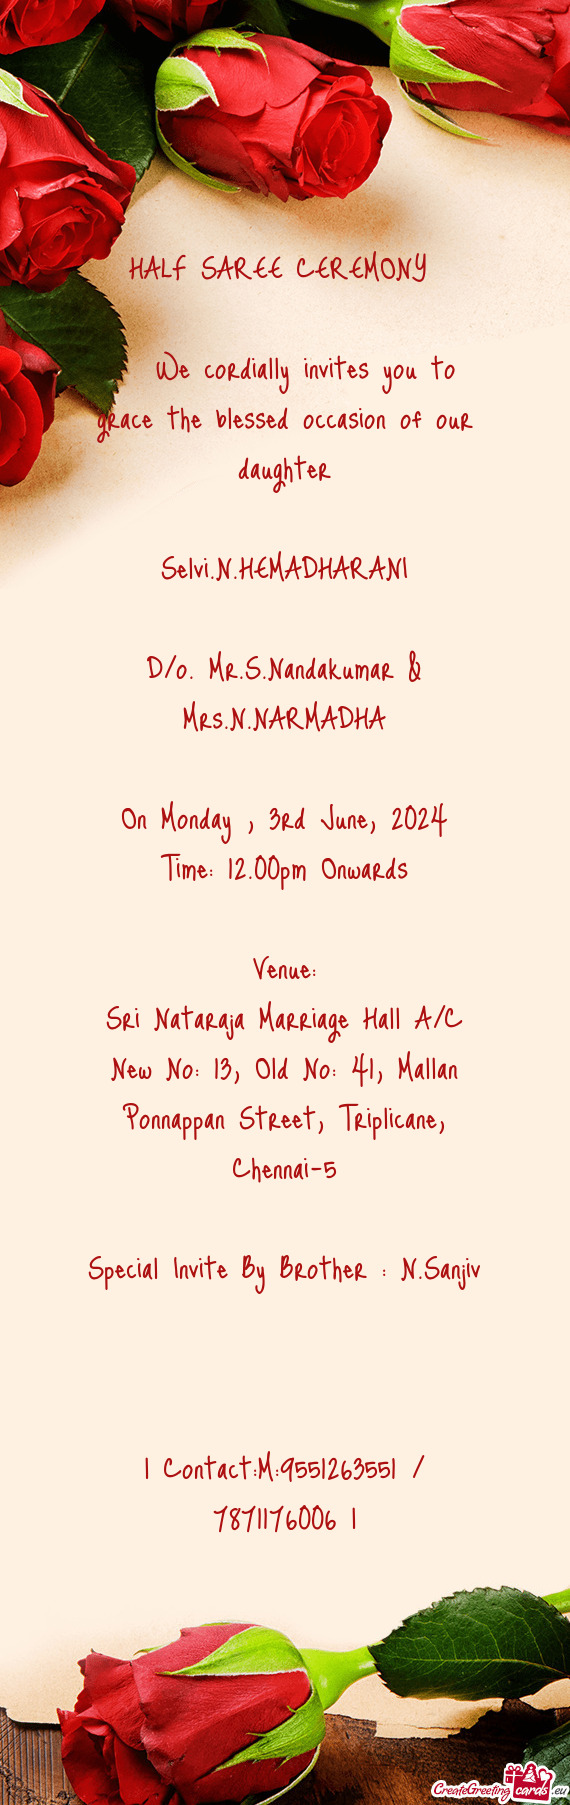 Sri Nataraja Marriage Hall A/C New No: 13, Old No: 41, Mallan Ponnappan Street, Triplicane, Chennai